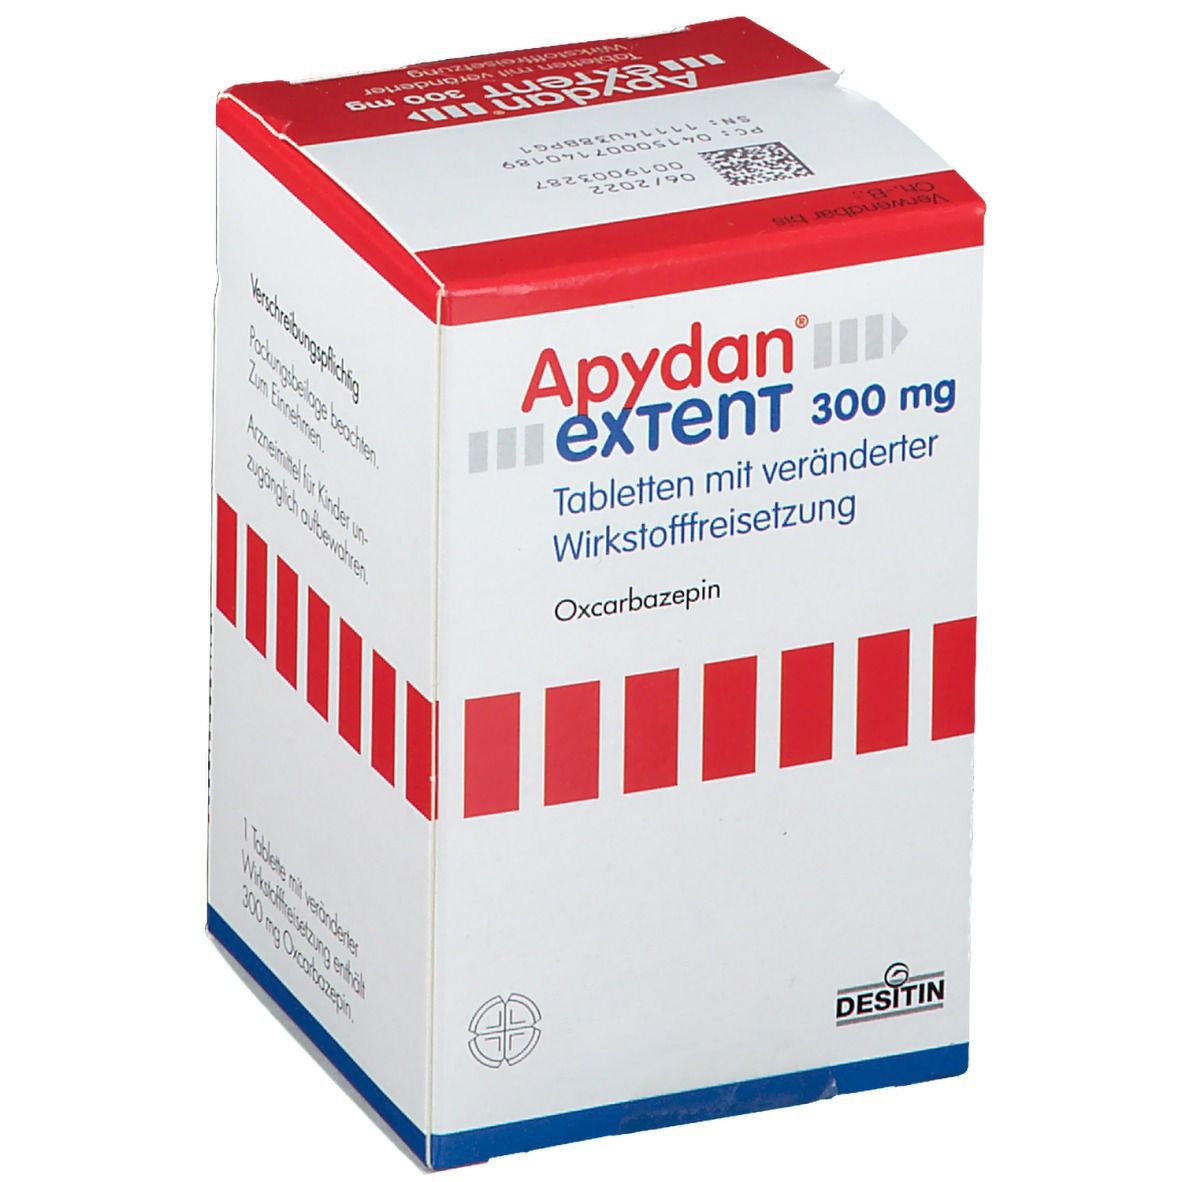 Apydan® extent 300 mg